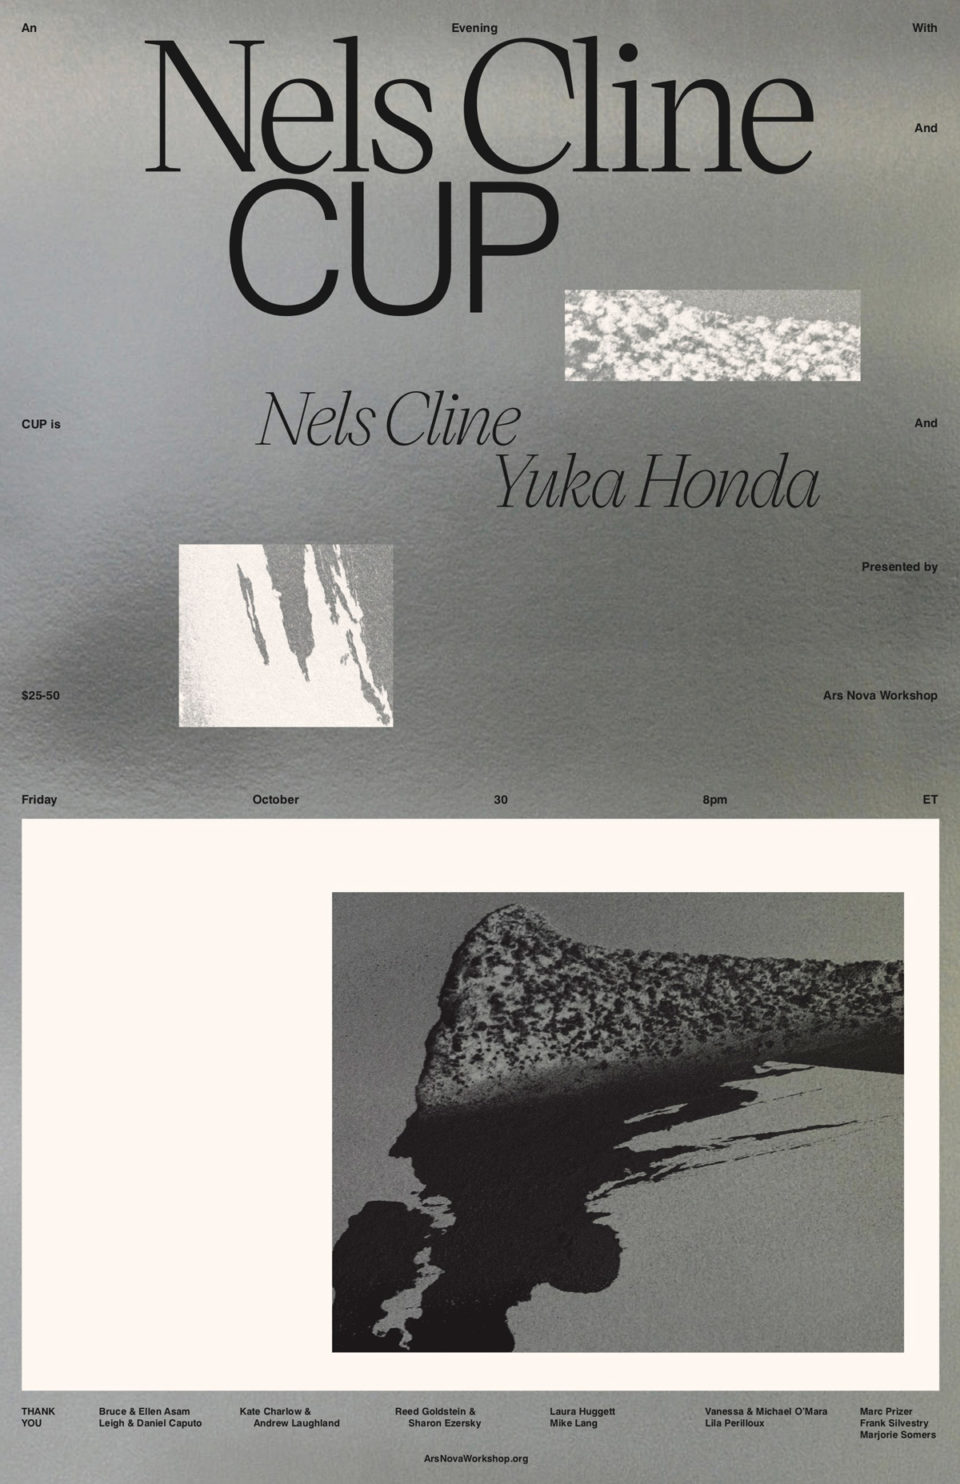 concert poster for Nels Cline/CUP presented by Ars Nova Workshop